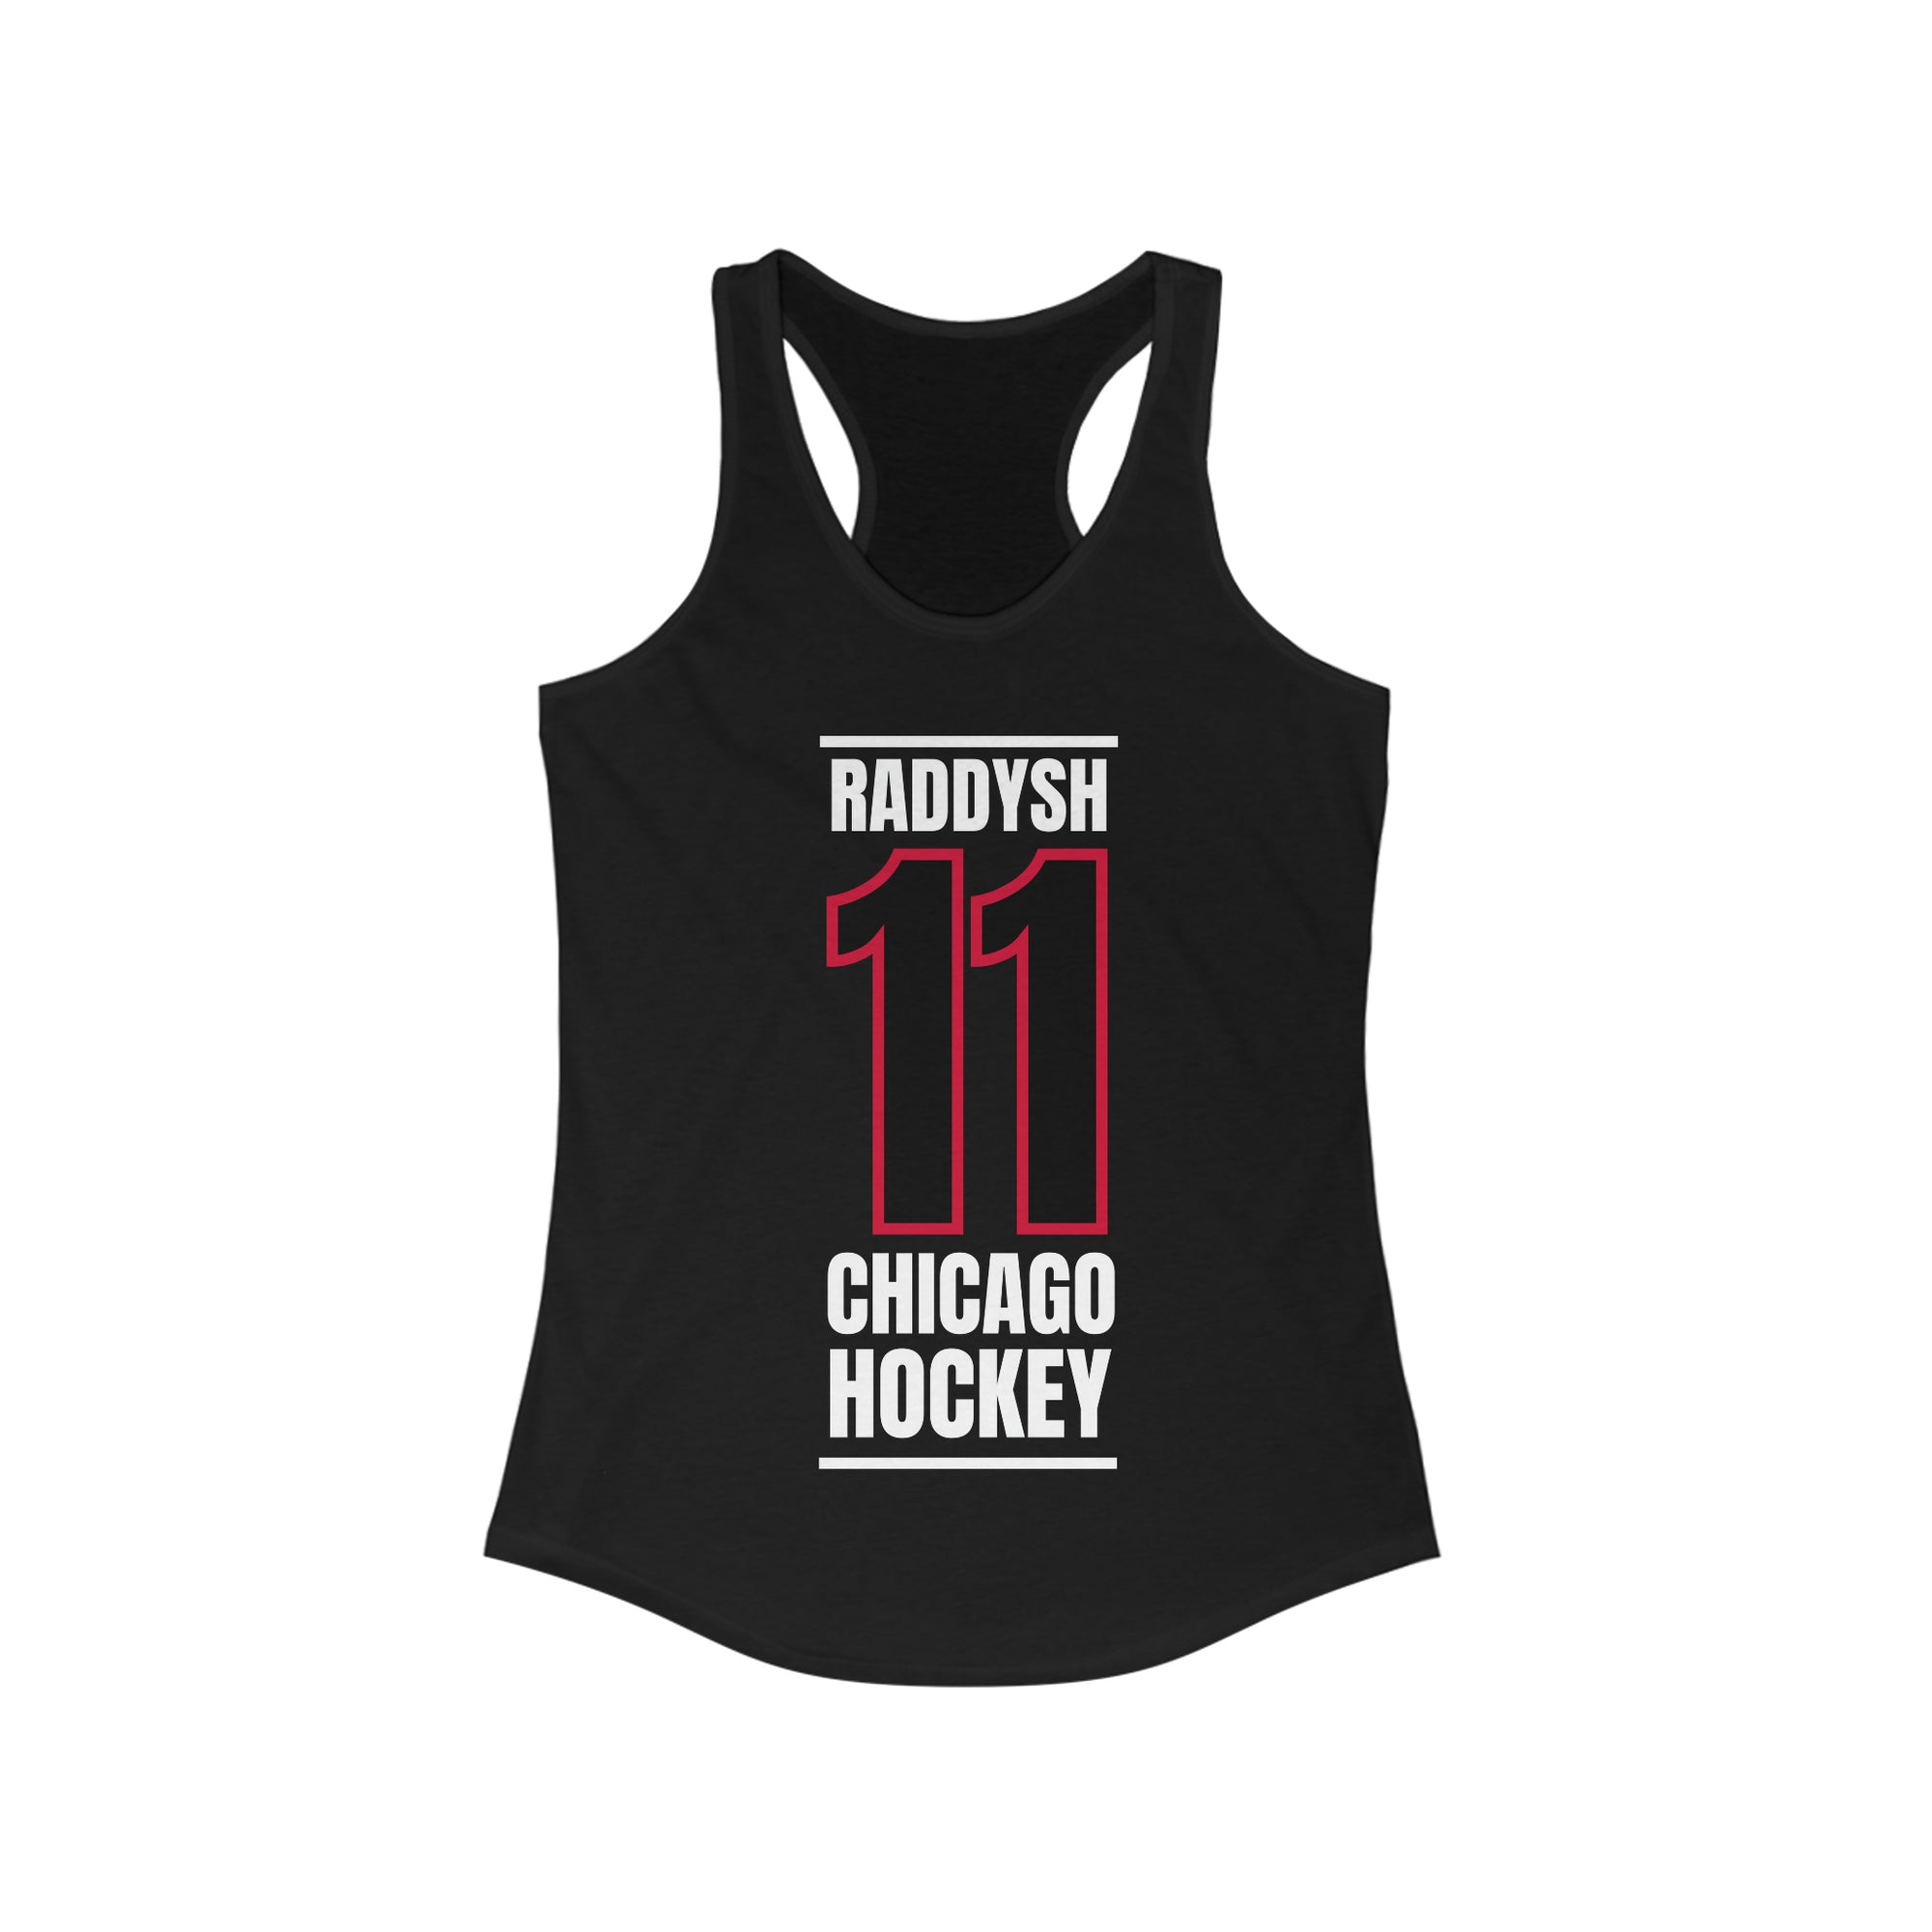 Raddysh 11 Chicago Hockey Black Vertical Design Women's Ideal Racerback Tank Top